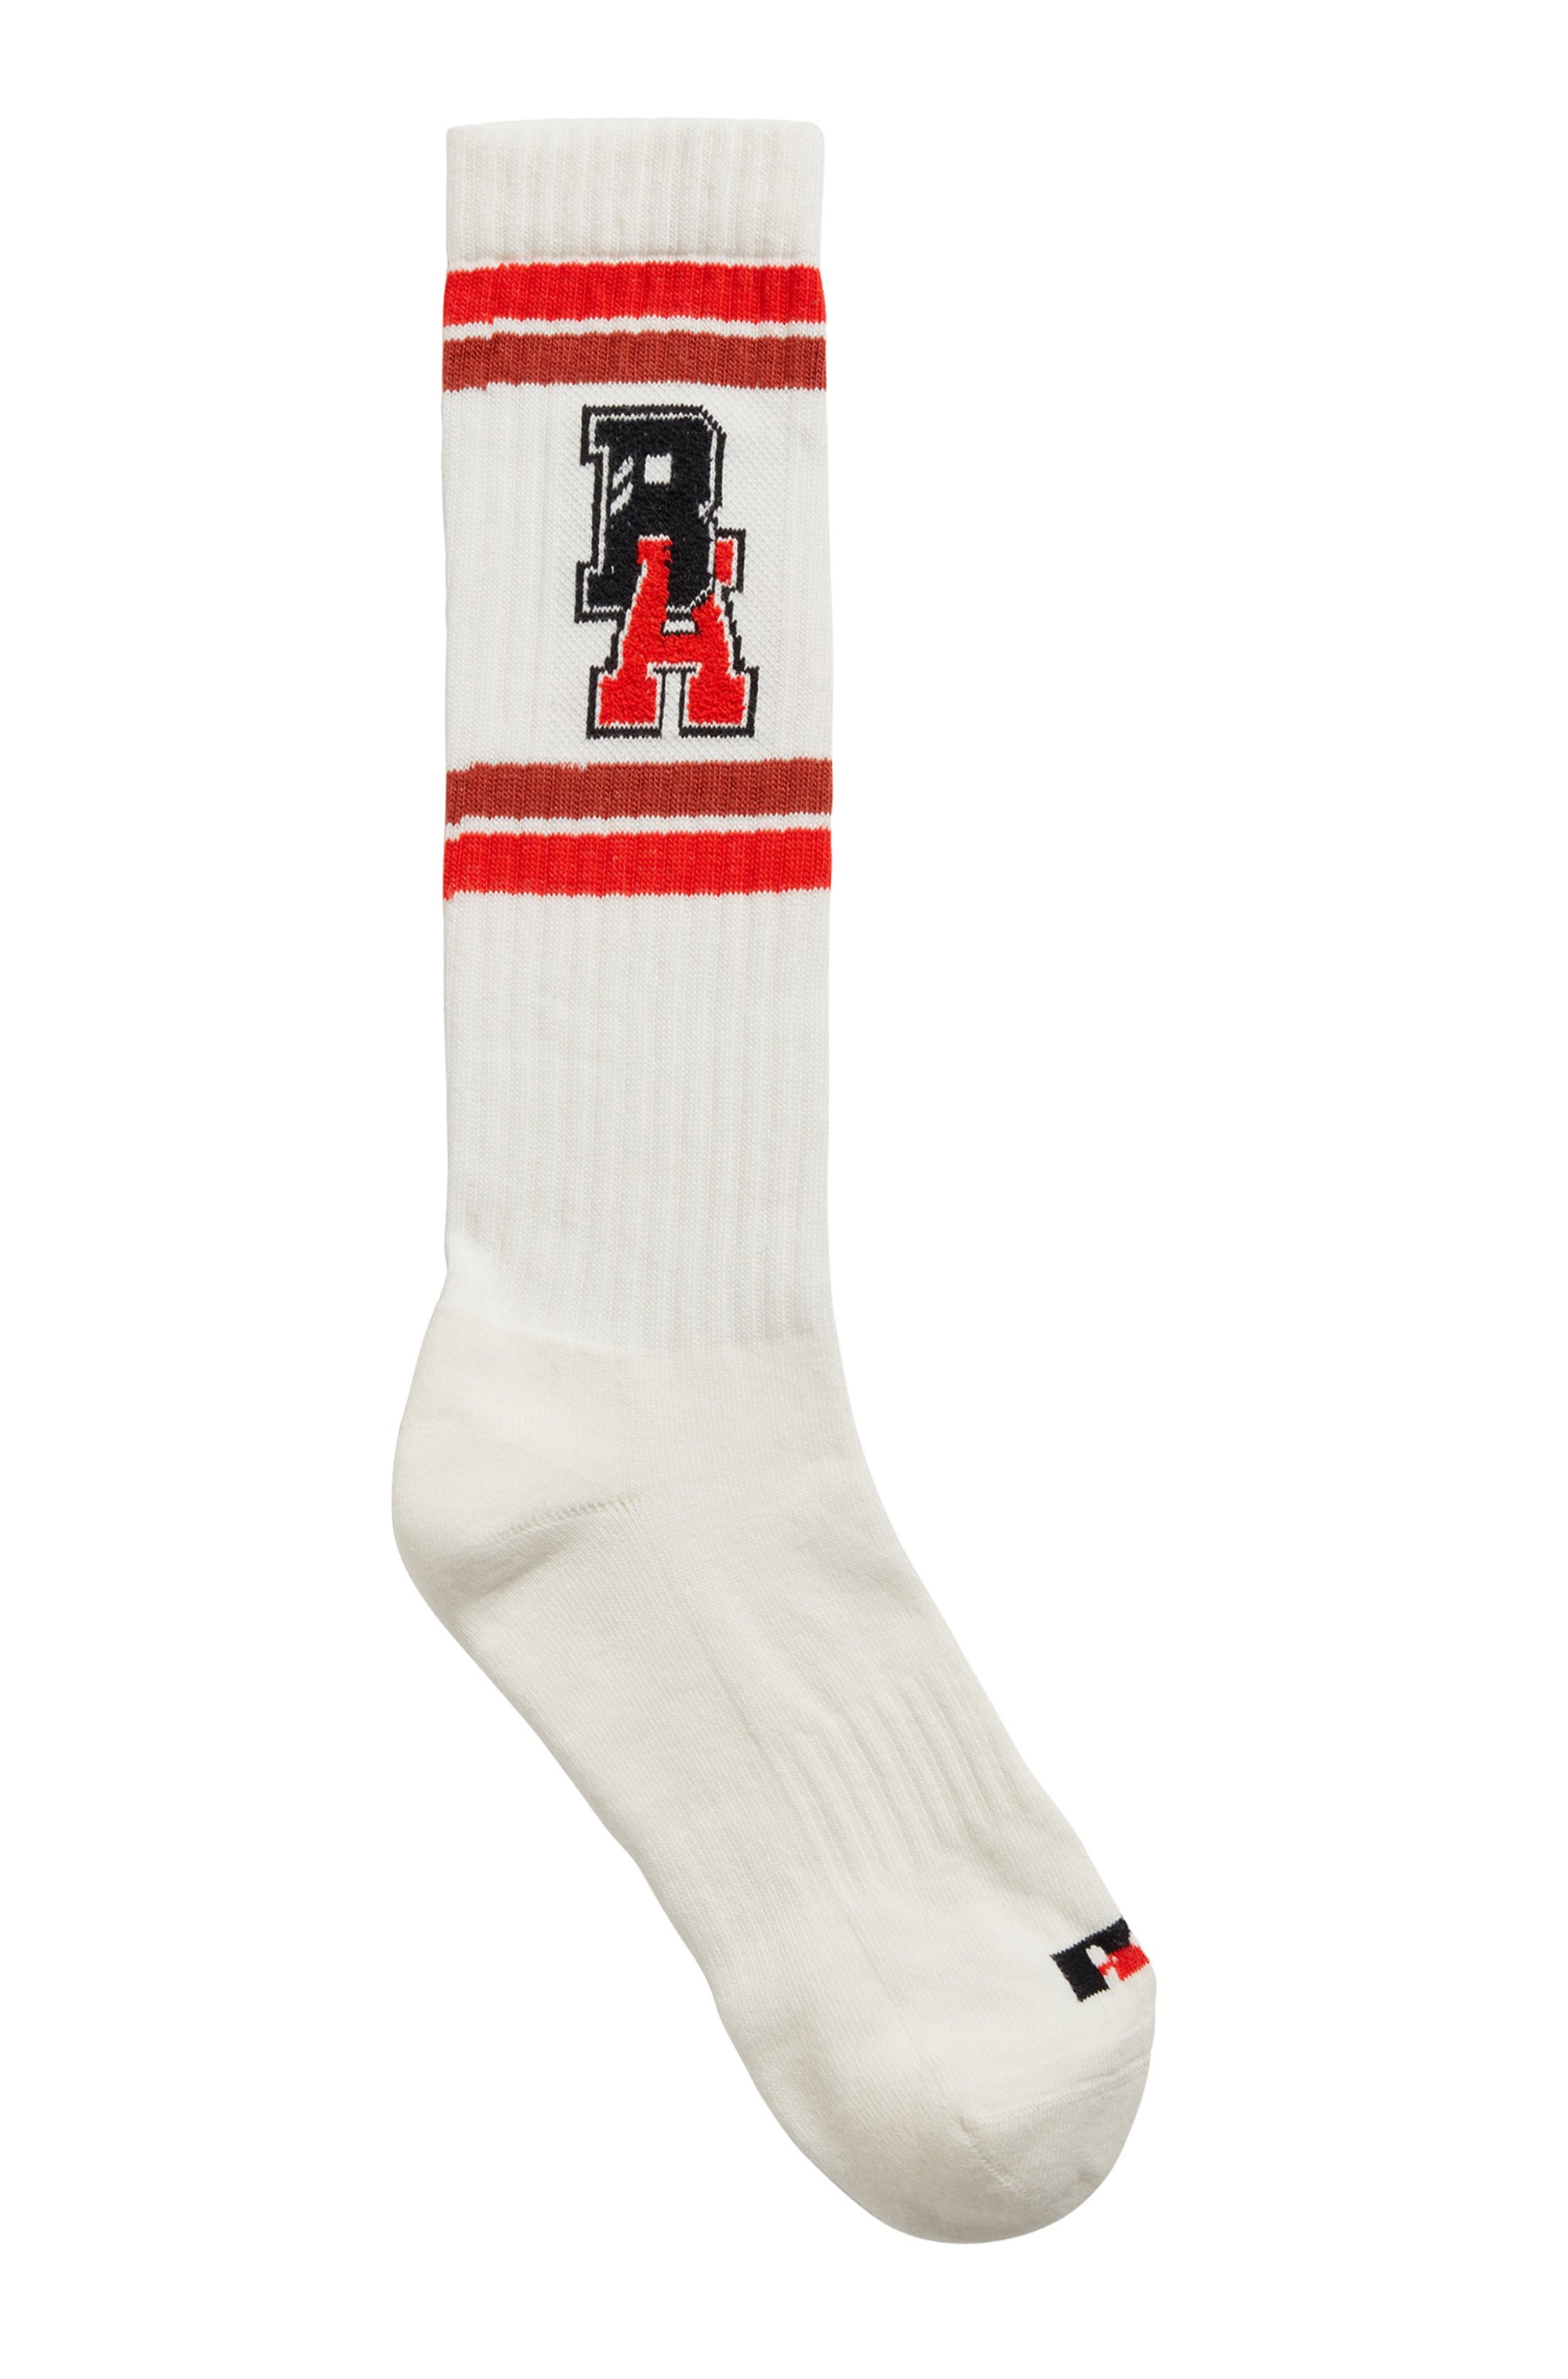 Unisex knee-high socks with varsity-style logo, White